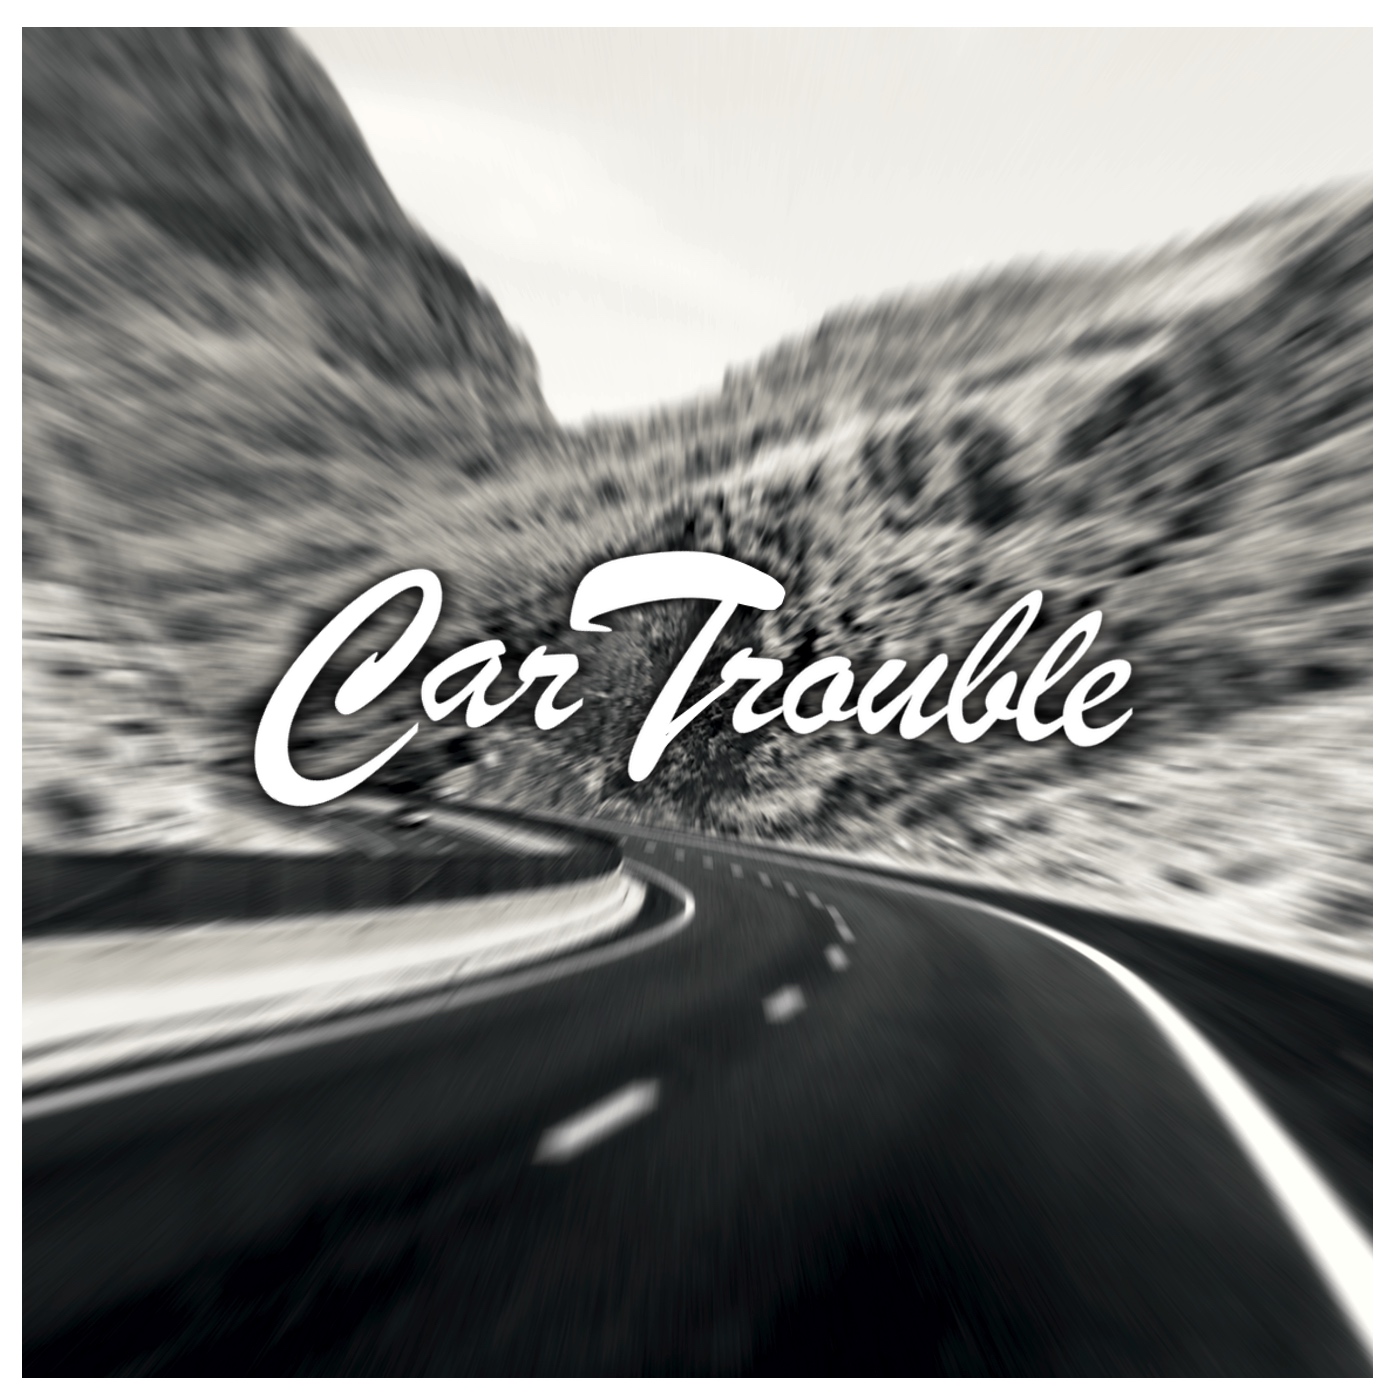 Car Trouble  Car Trouble - Lyrics and credits